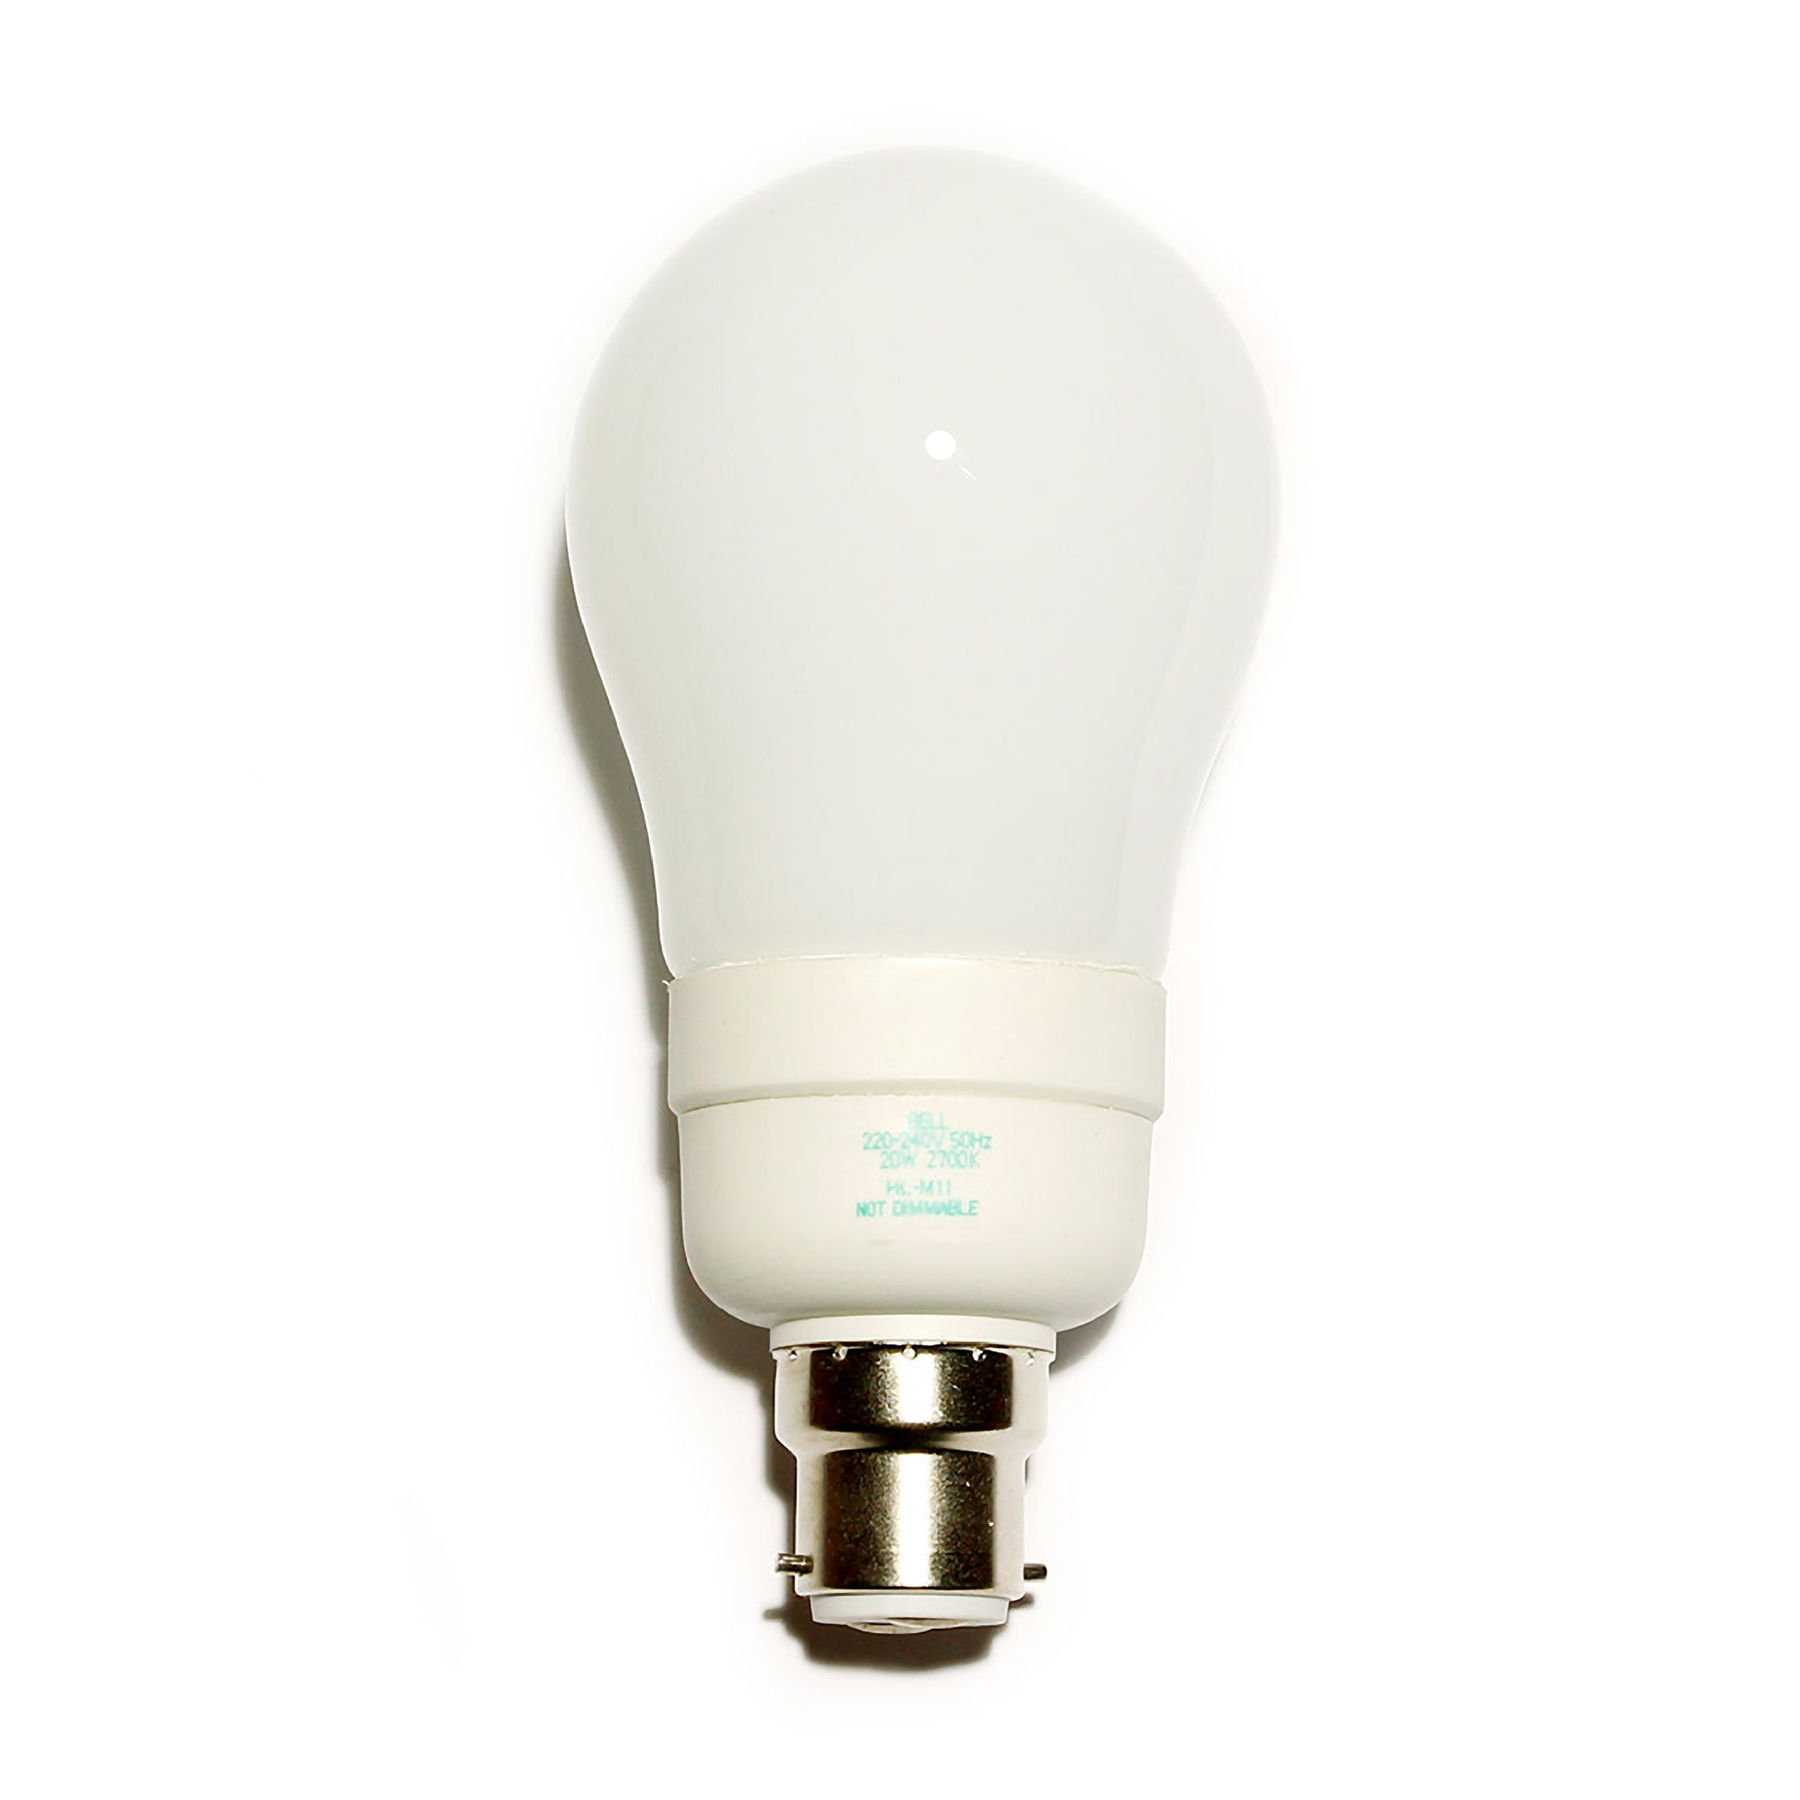 2x 15W Low Energy CFL GLS Light Bulb 2700K Warm White BC B22 Bayonet Lamp Globe